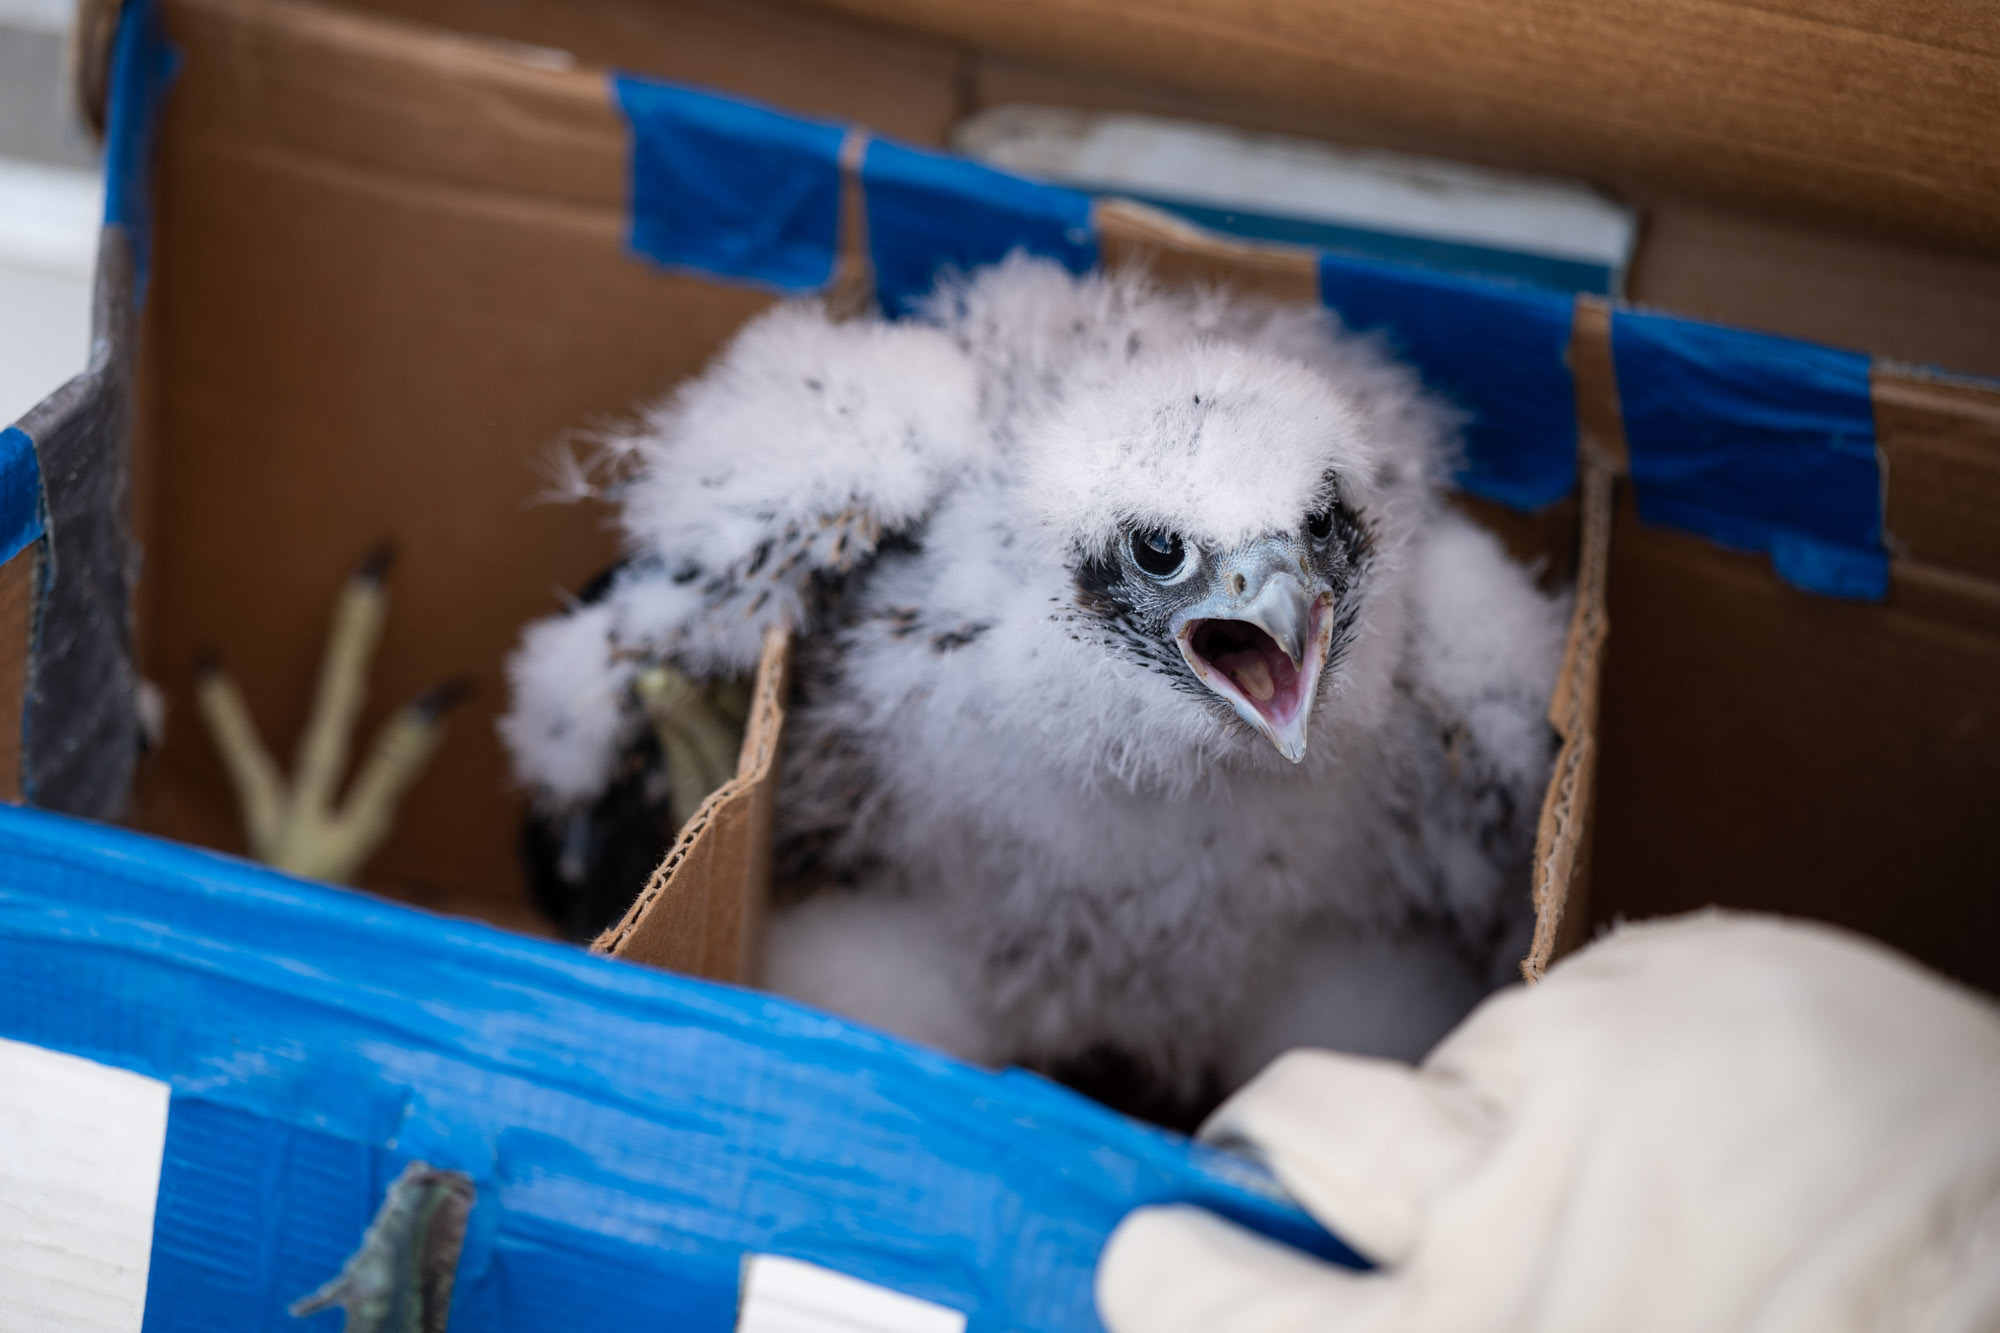 Dnr Experts Band Two Healthy Peregrine Falcon Chicks At Gvsu Nesting Box Gvnext